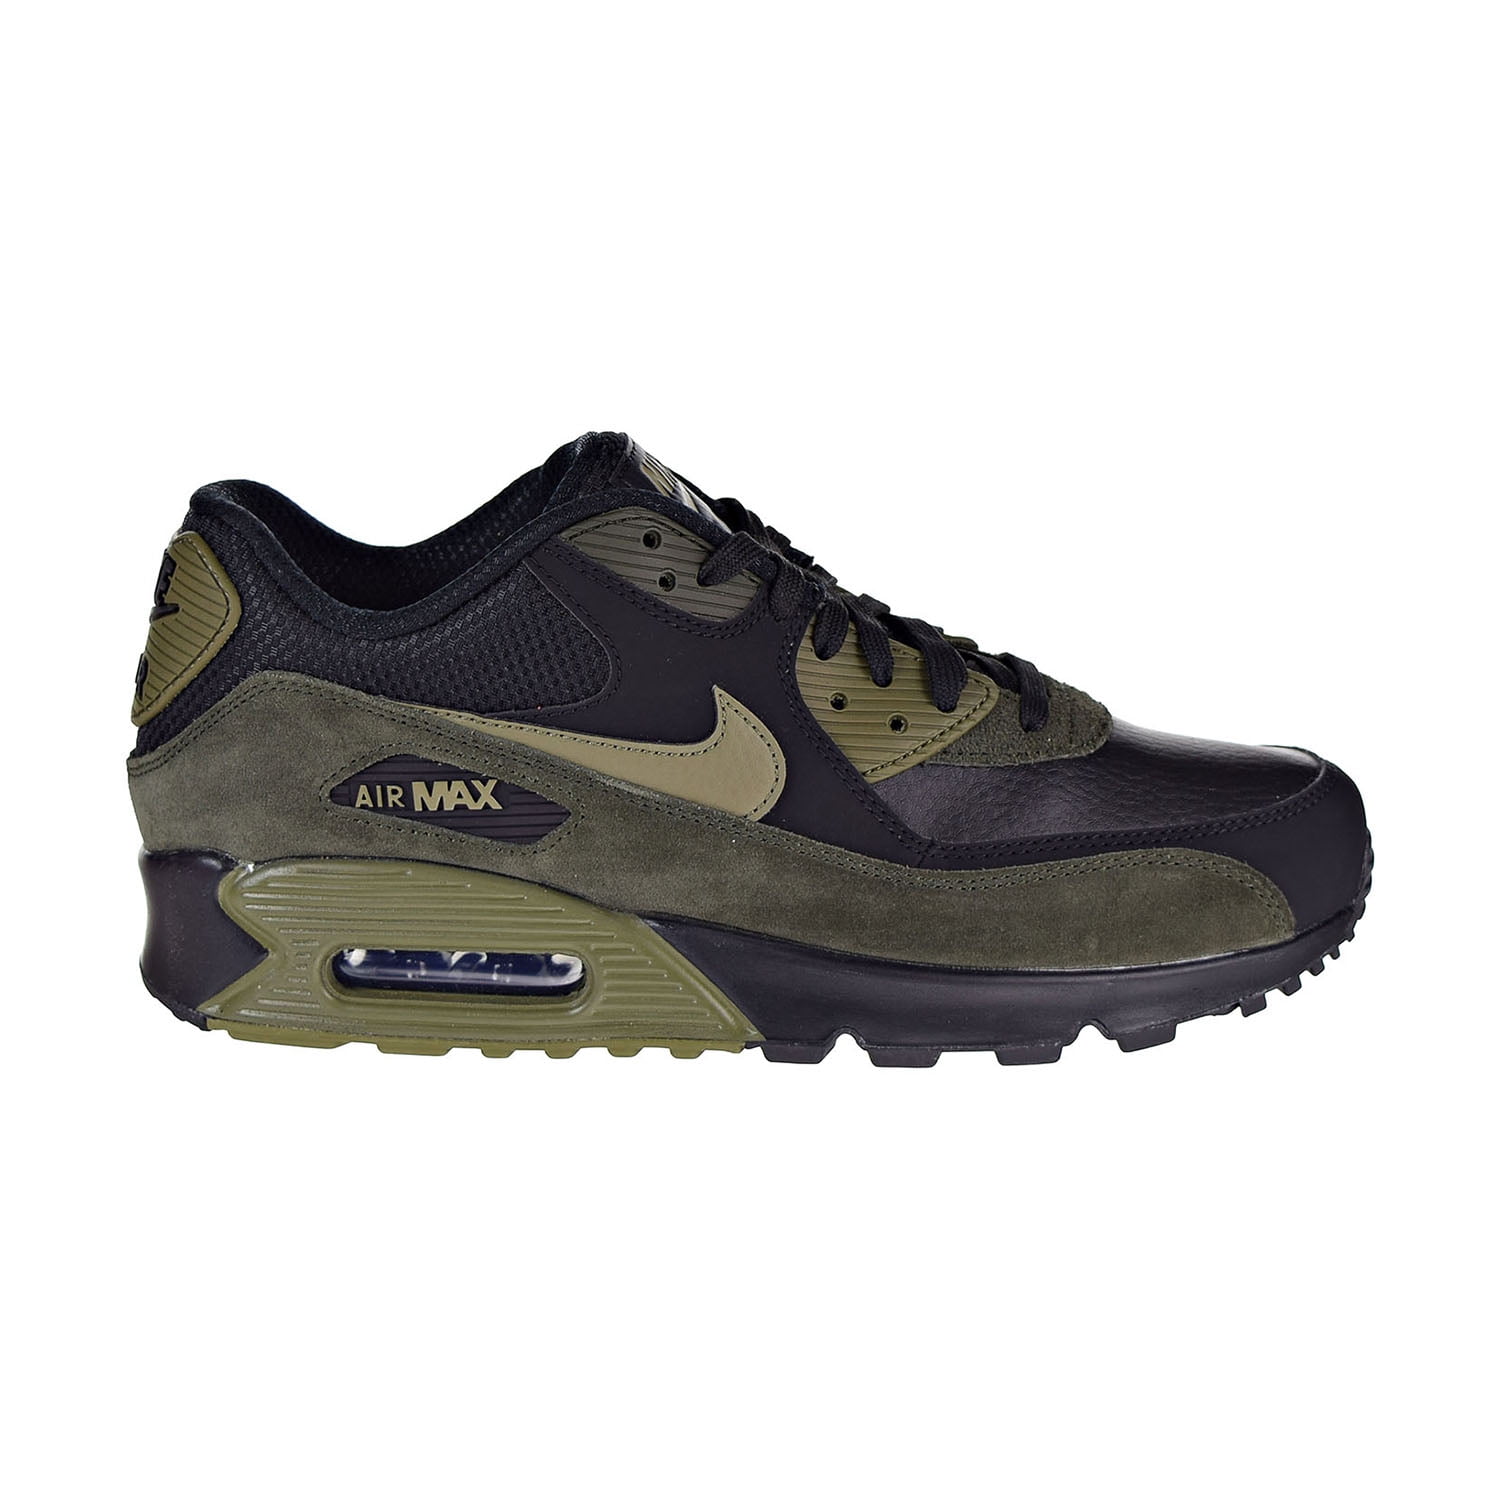 Importancia hipoteca Invalidez Nike Air Max 90 Leather Men's Shoes Black/Medium Olive-Sequoia 302519-014 -  Walmart.com